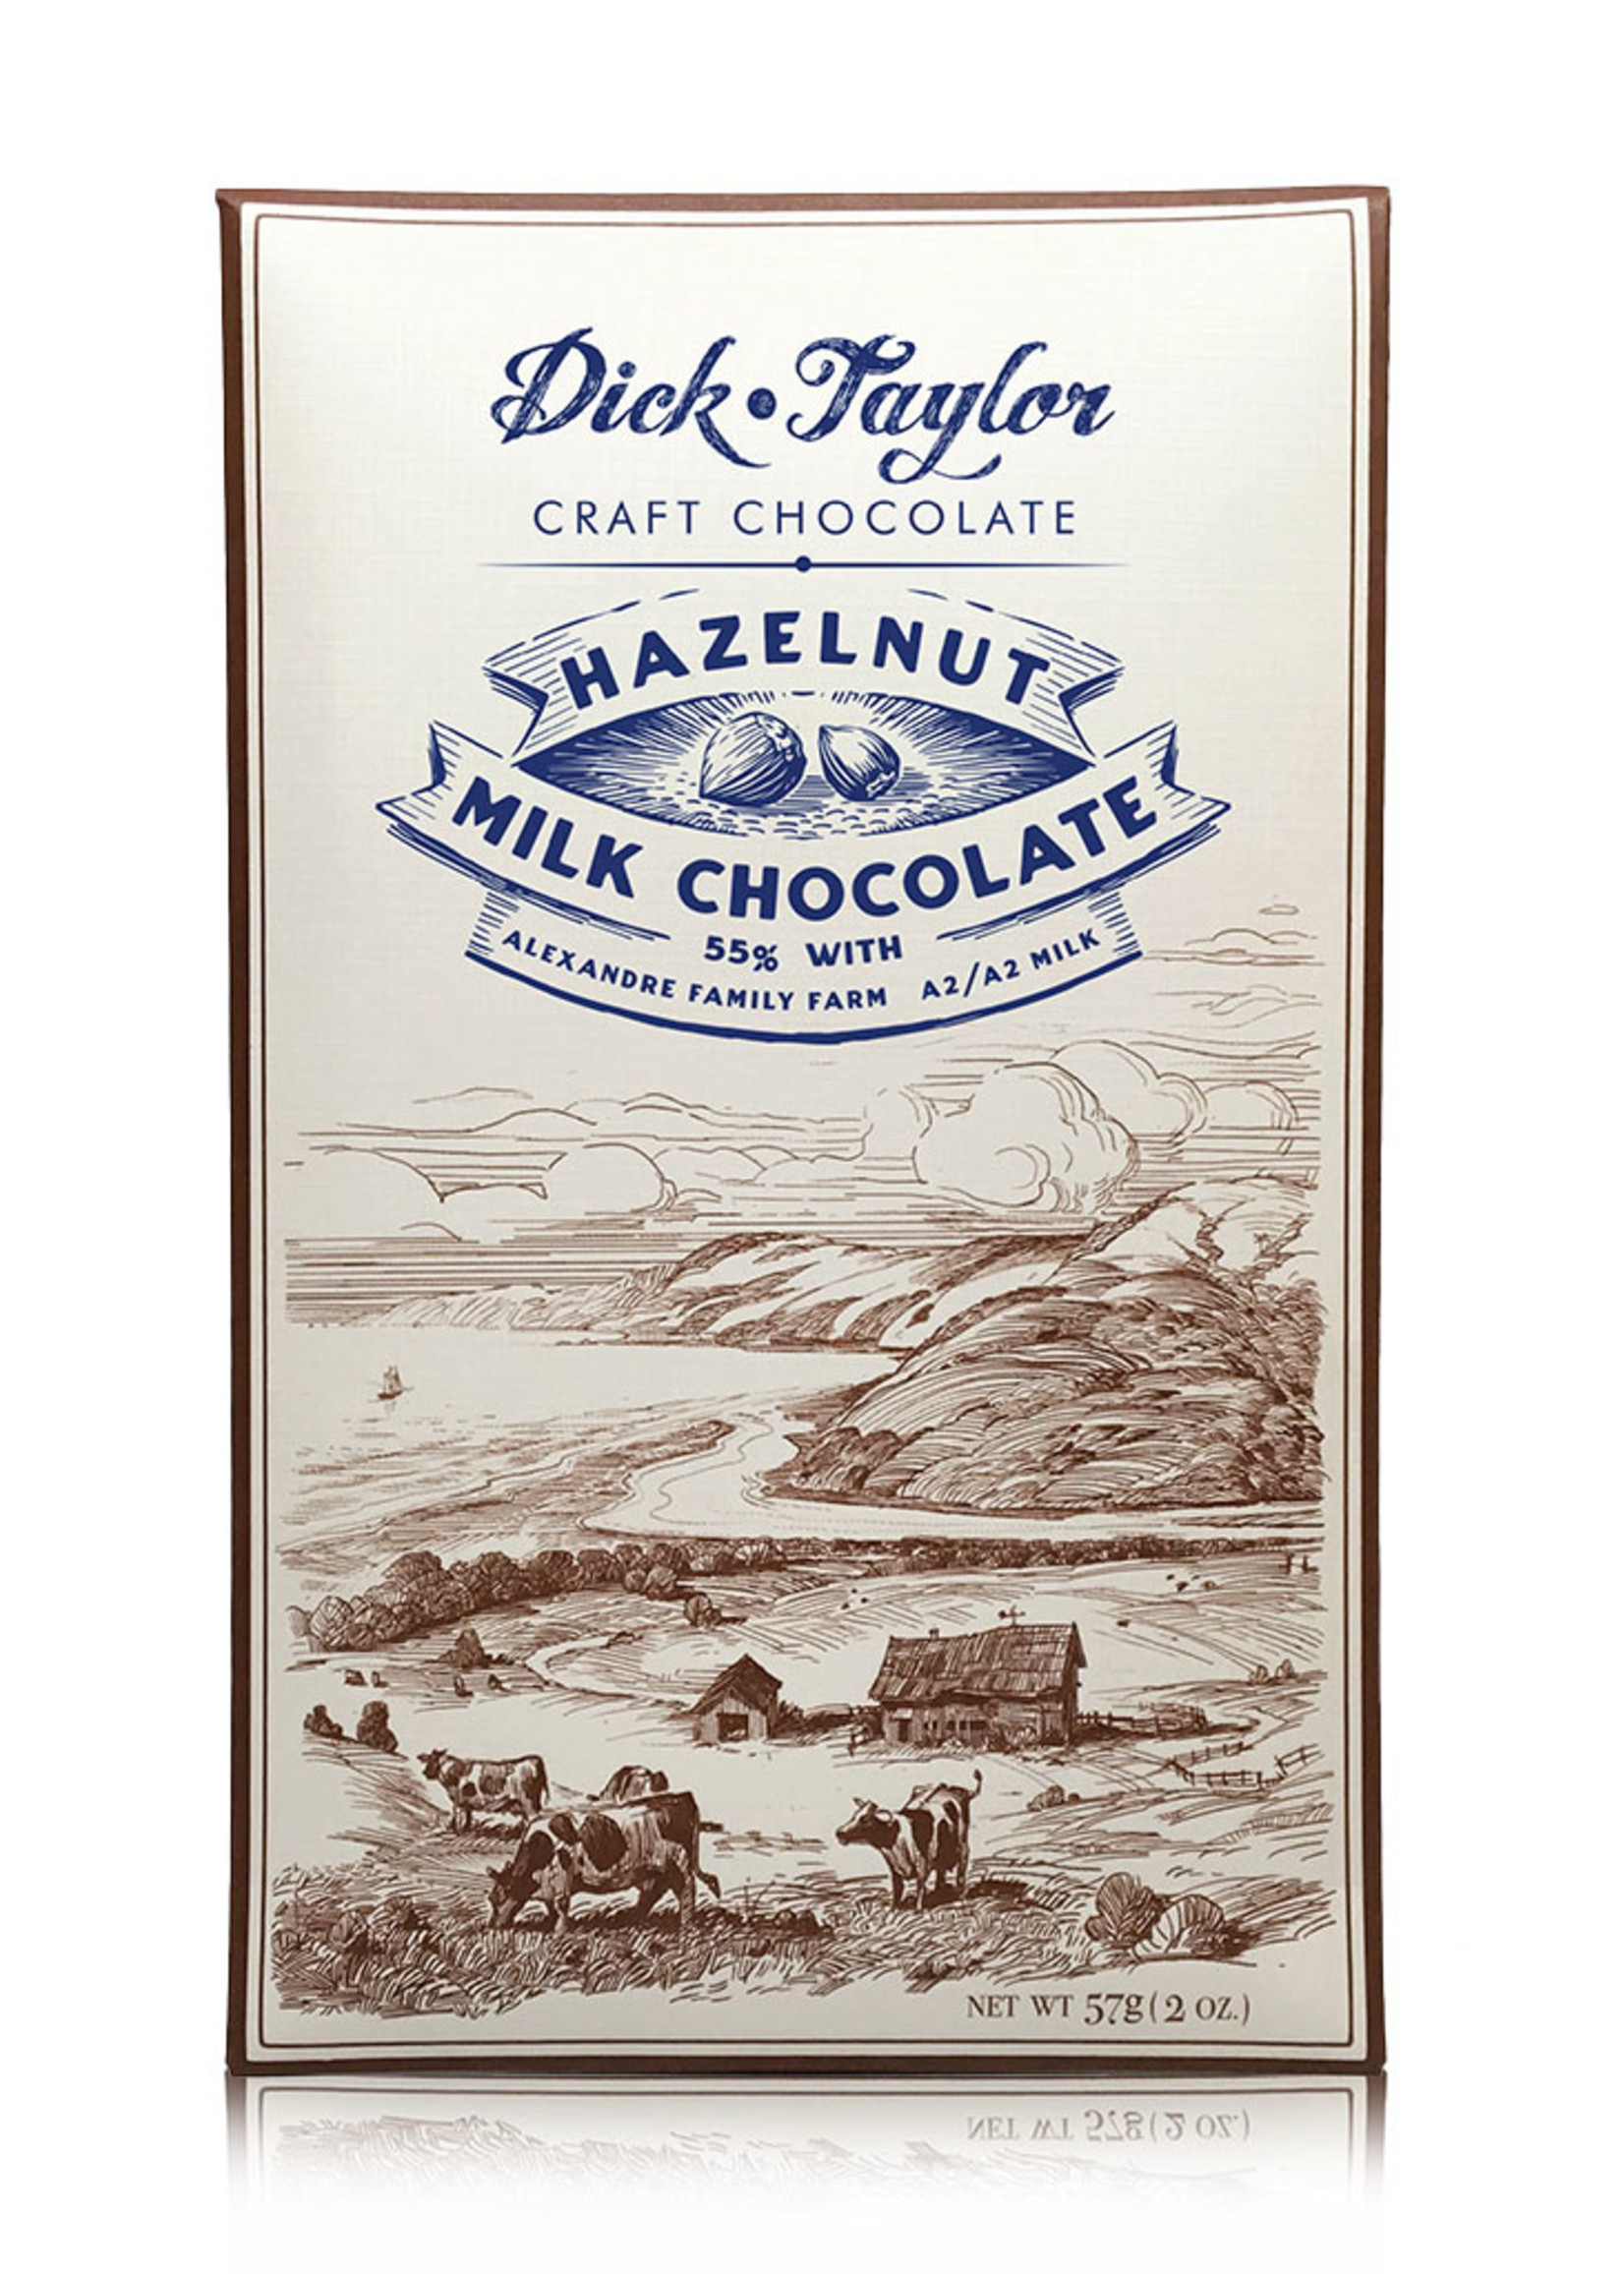 Dick Taylor Dick Taylor Craft Chocolate 55% Hazelnut Milk Chocolate 2oz